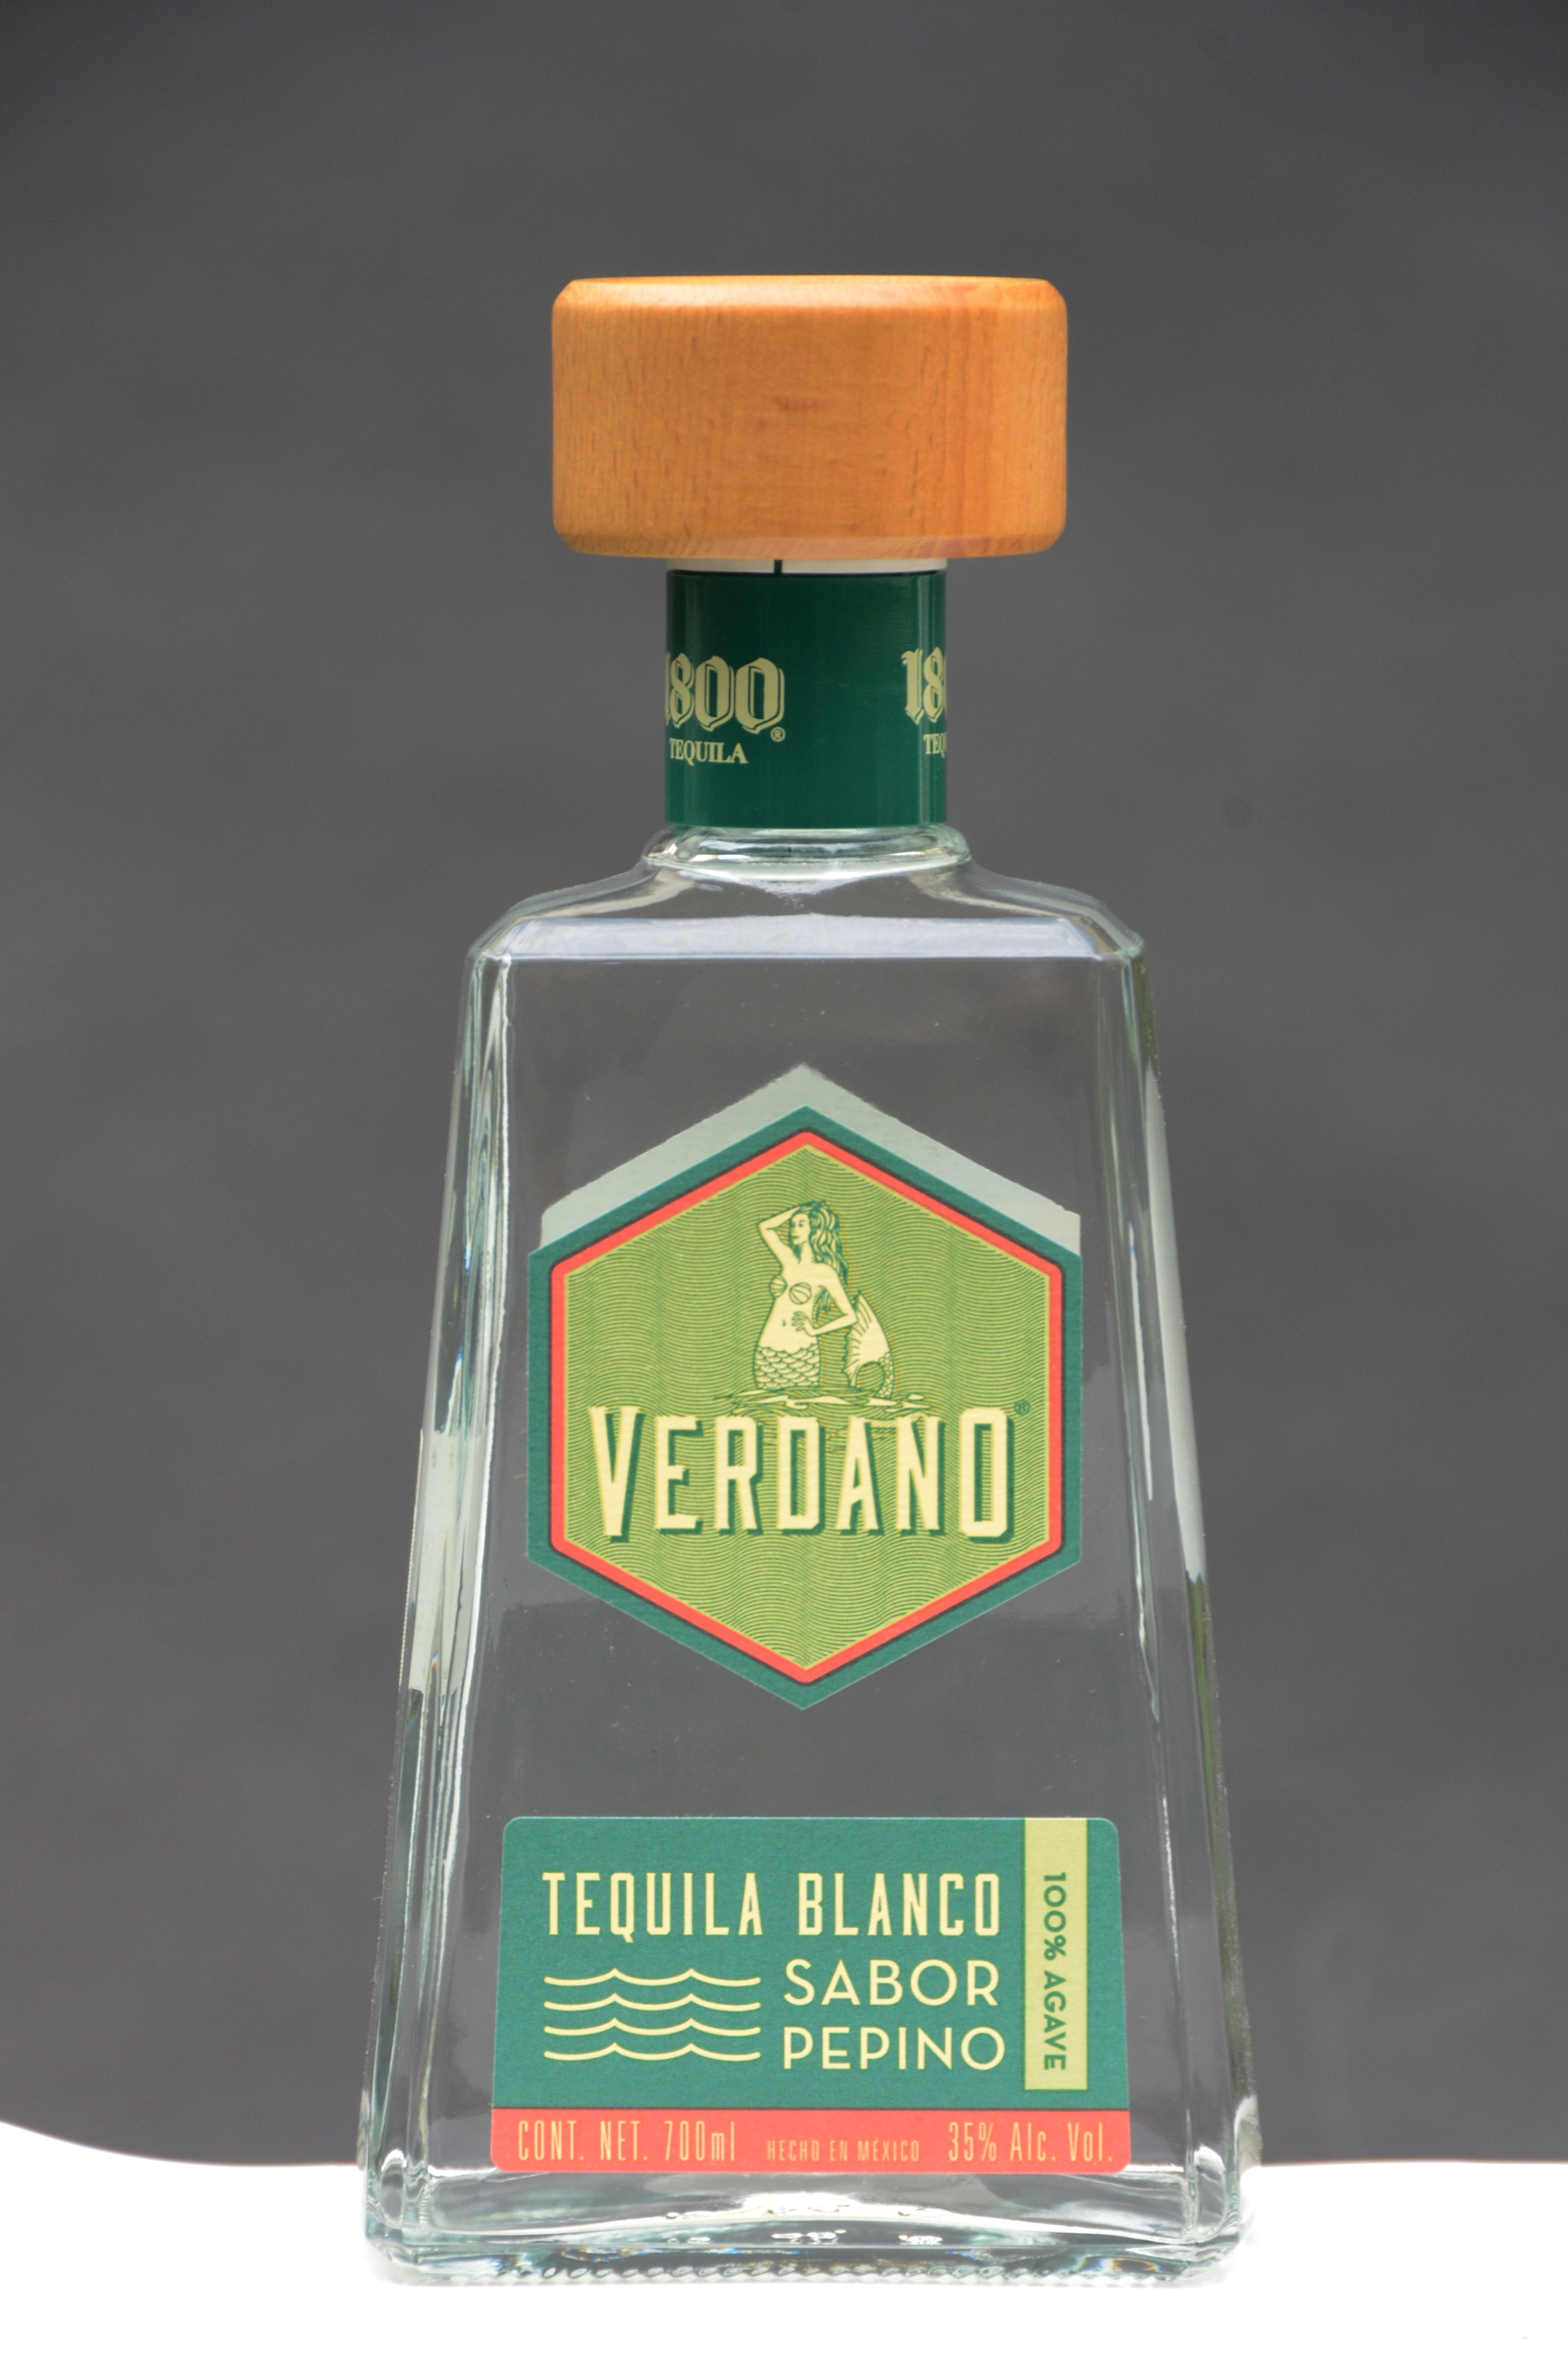 Verdano Tequila Blanco Sabor Pepino - Verdana Tequila , HD Wallpaper & Backgrounds